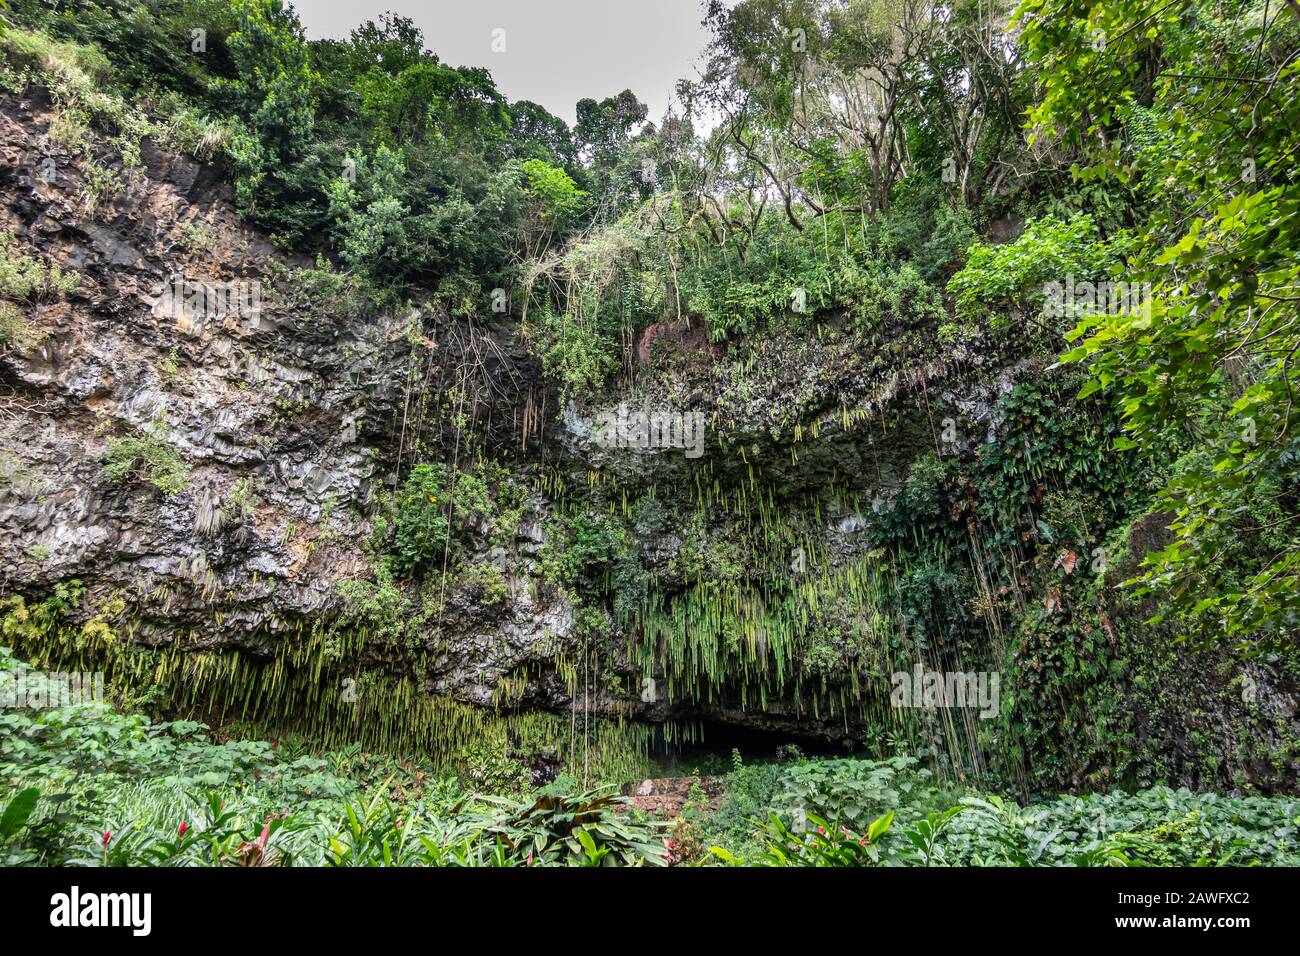 Kamokila Village, Kauai, Hawaii, USA. - January 16, 2020: Fern grotto hidden by green sword fern, trees, and plants at bottom of gray rock cliff. Silv Stock Photo